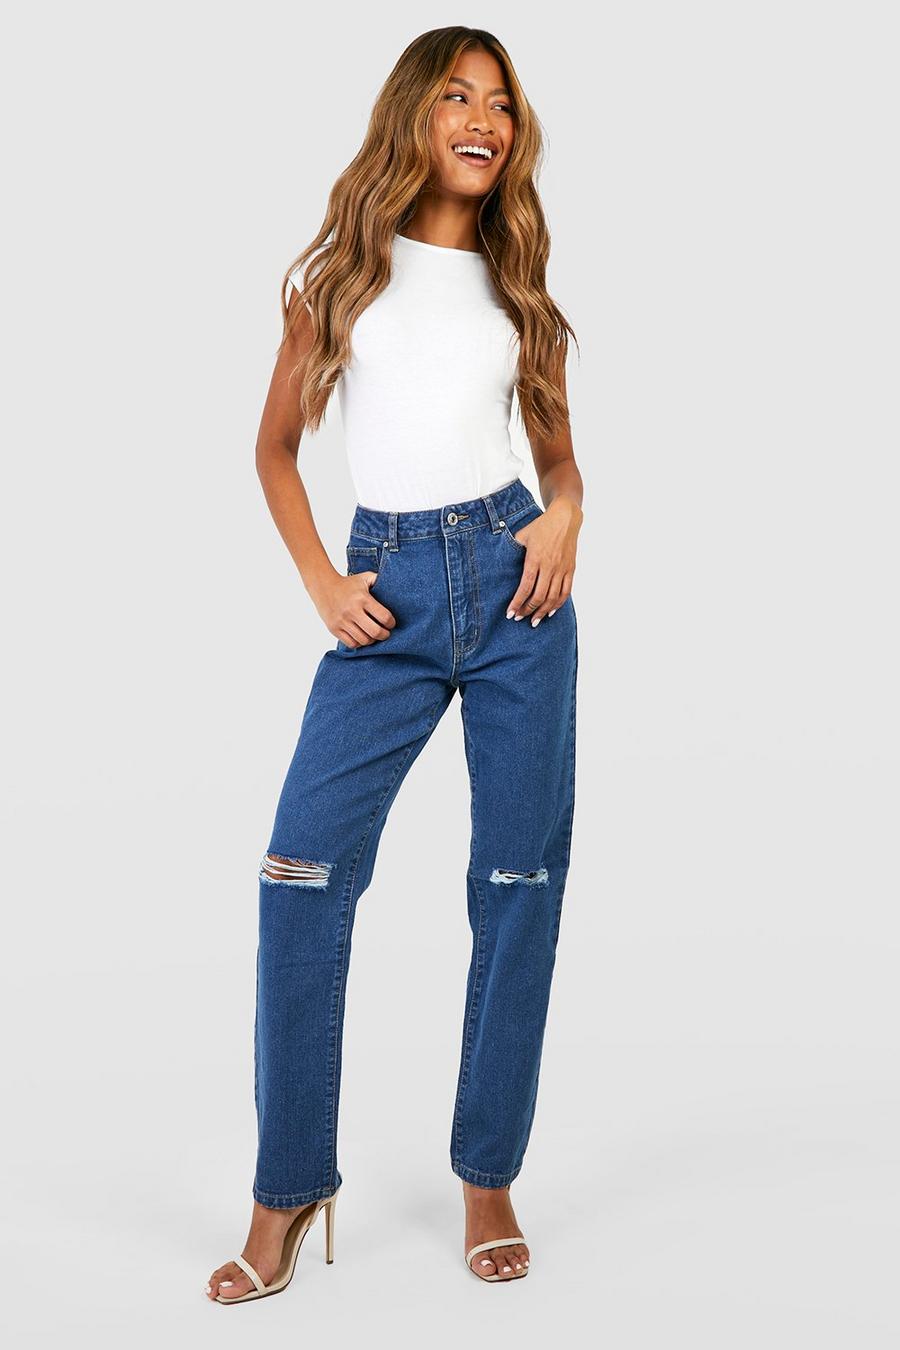 Indigo Blue Cropped Jeans - Women - Ready-to-Wear